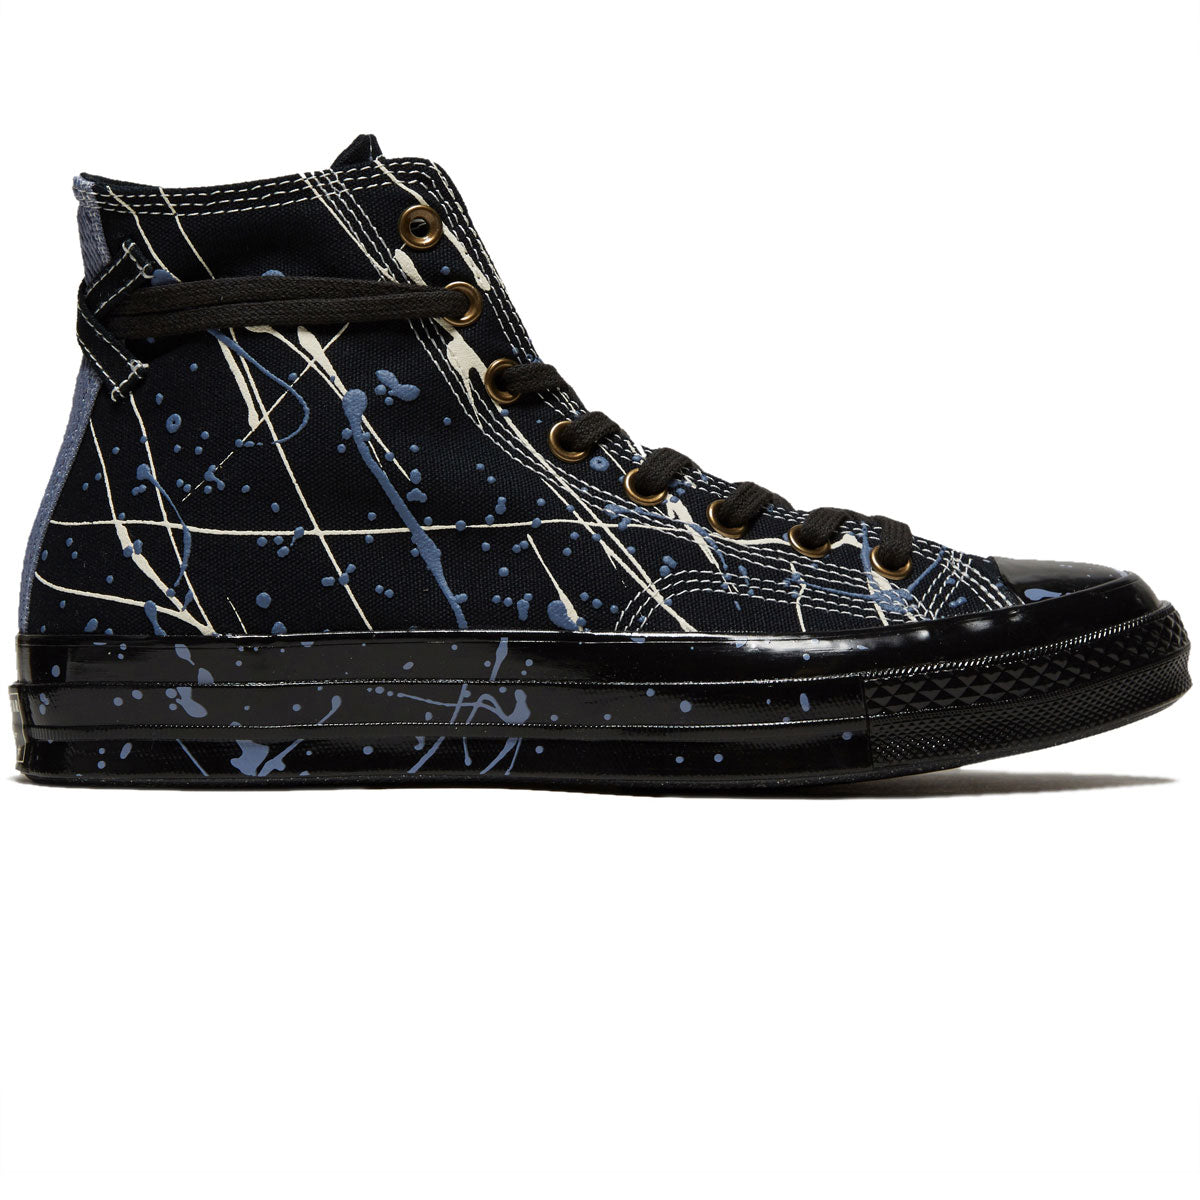 Converse Chuck 70 Hi Paint Splatter Shoes - Black/Egret/Thunder Daze image 1